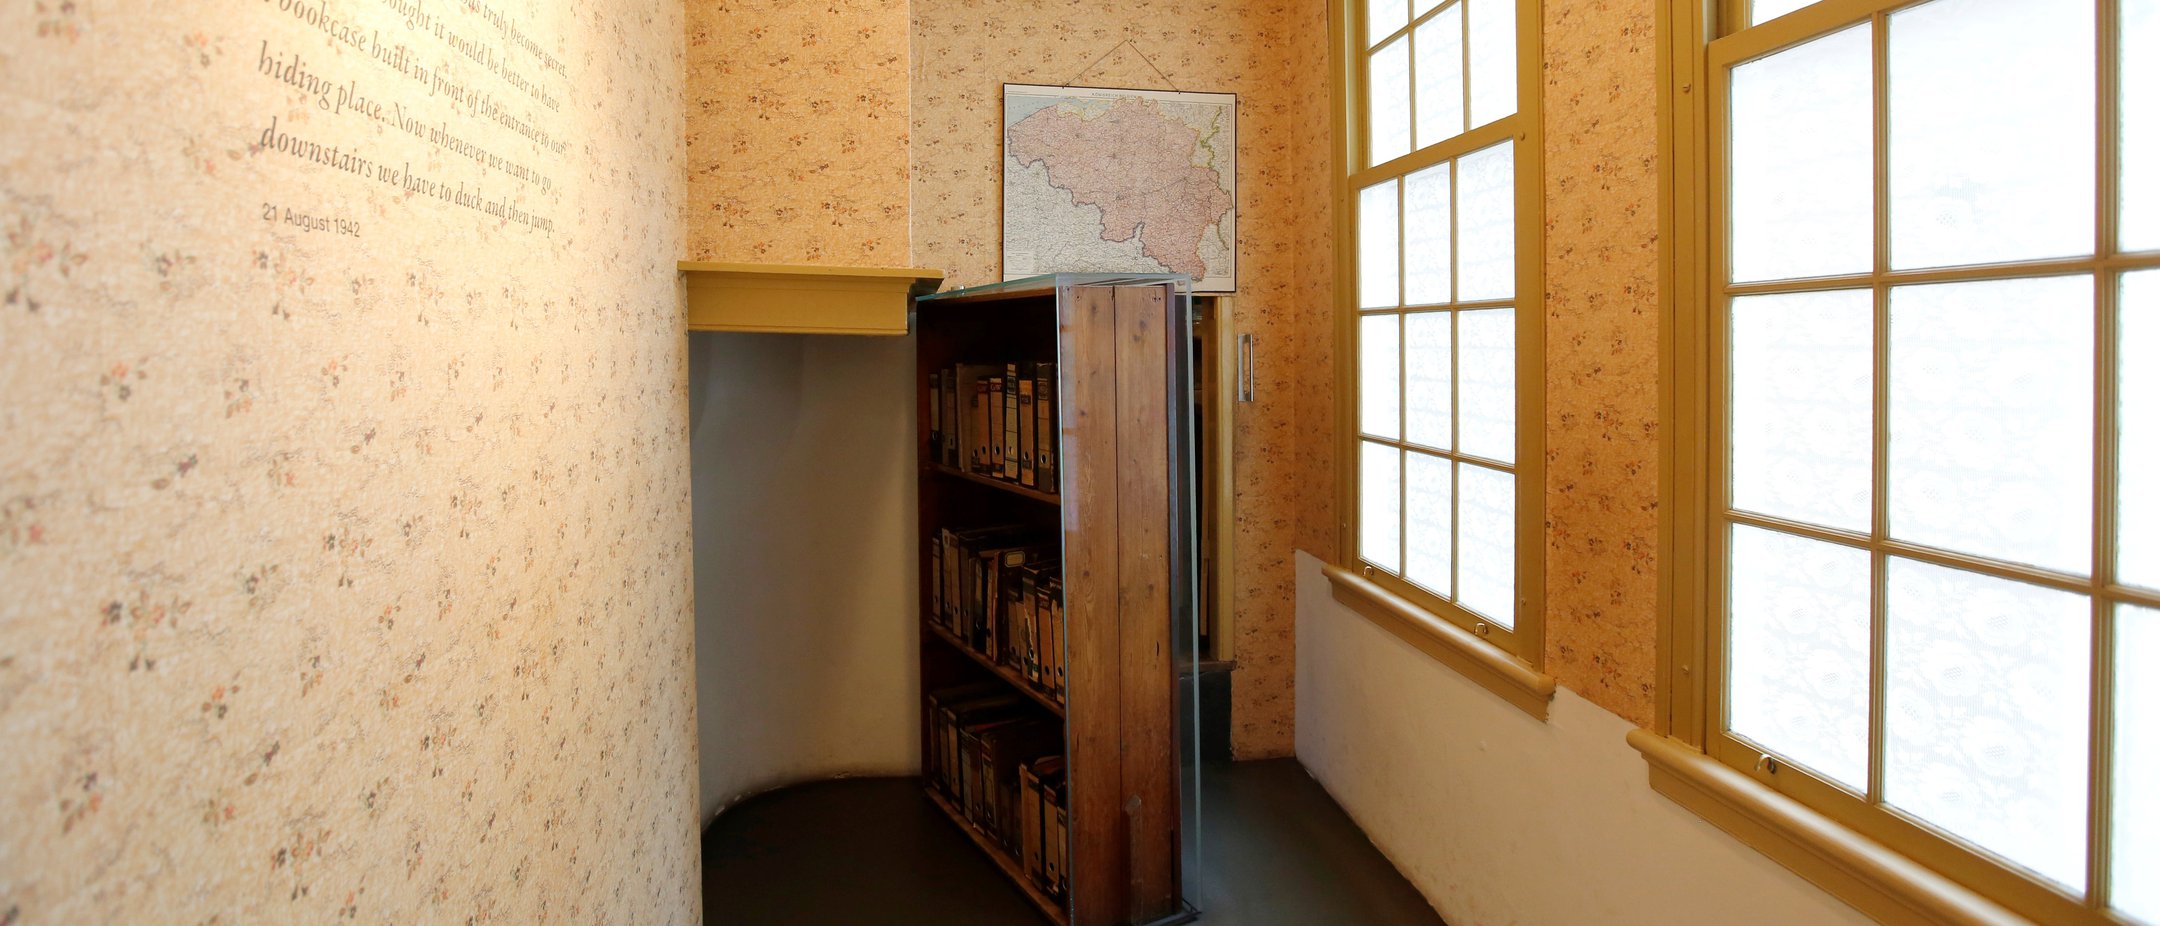 Met Naniki naar Cultuur naar Het Anne Frank Huis : Mocca Amsterdam